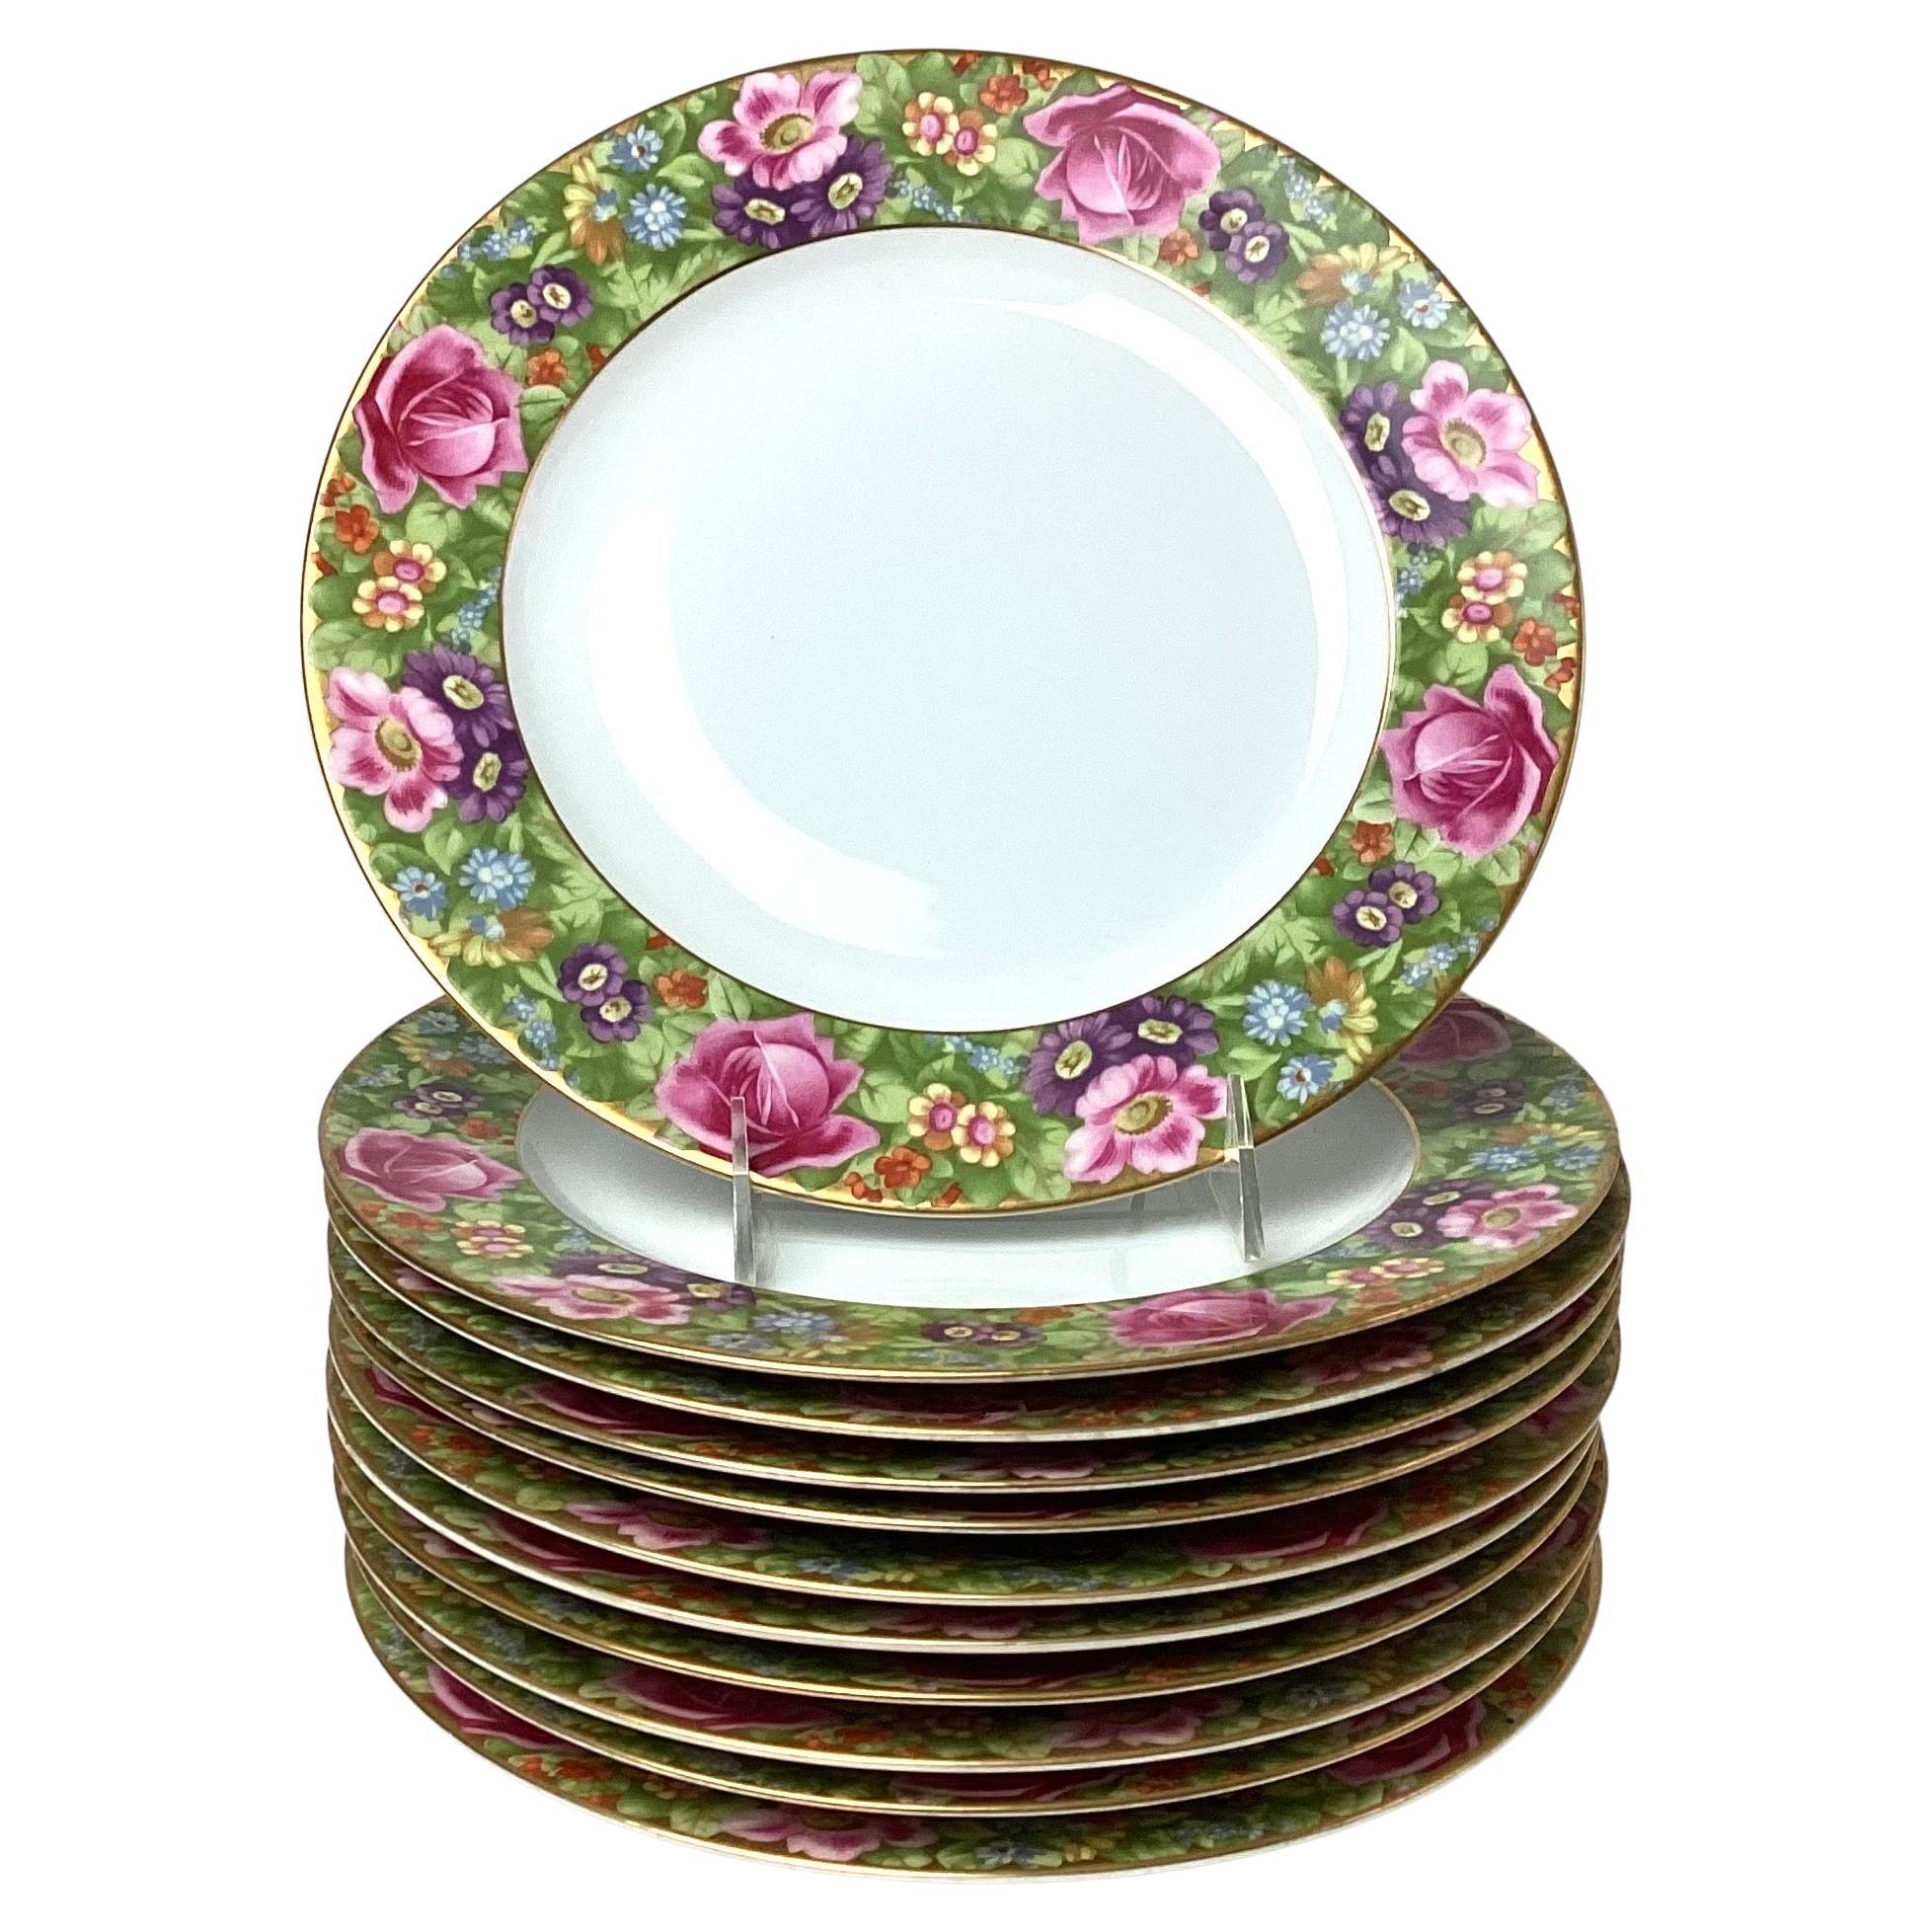 10 Rosenthal Bavaria Pink Rose Floral with Gold Decorative Edge Dinner Plates